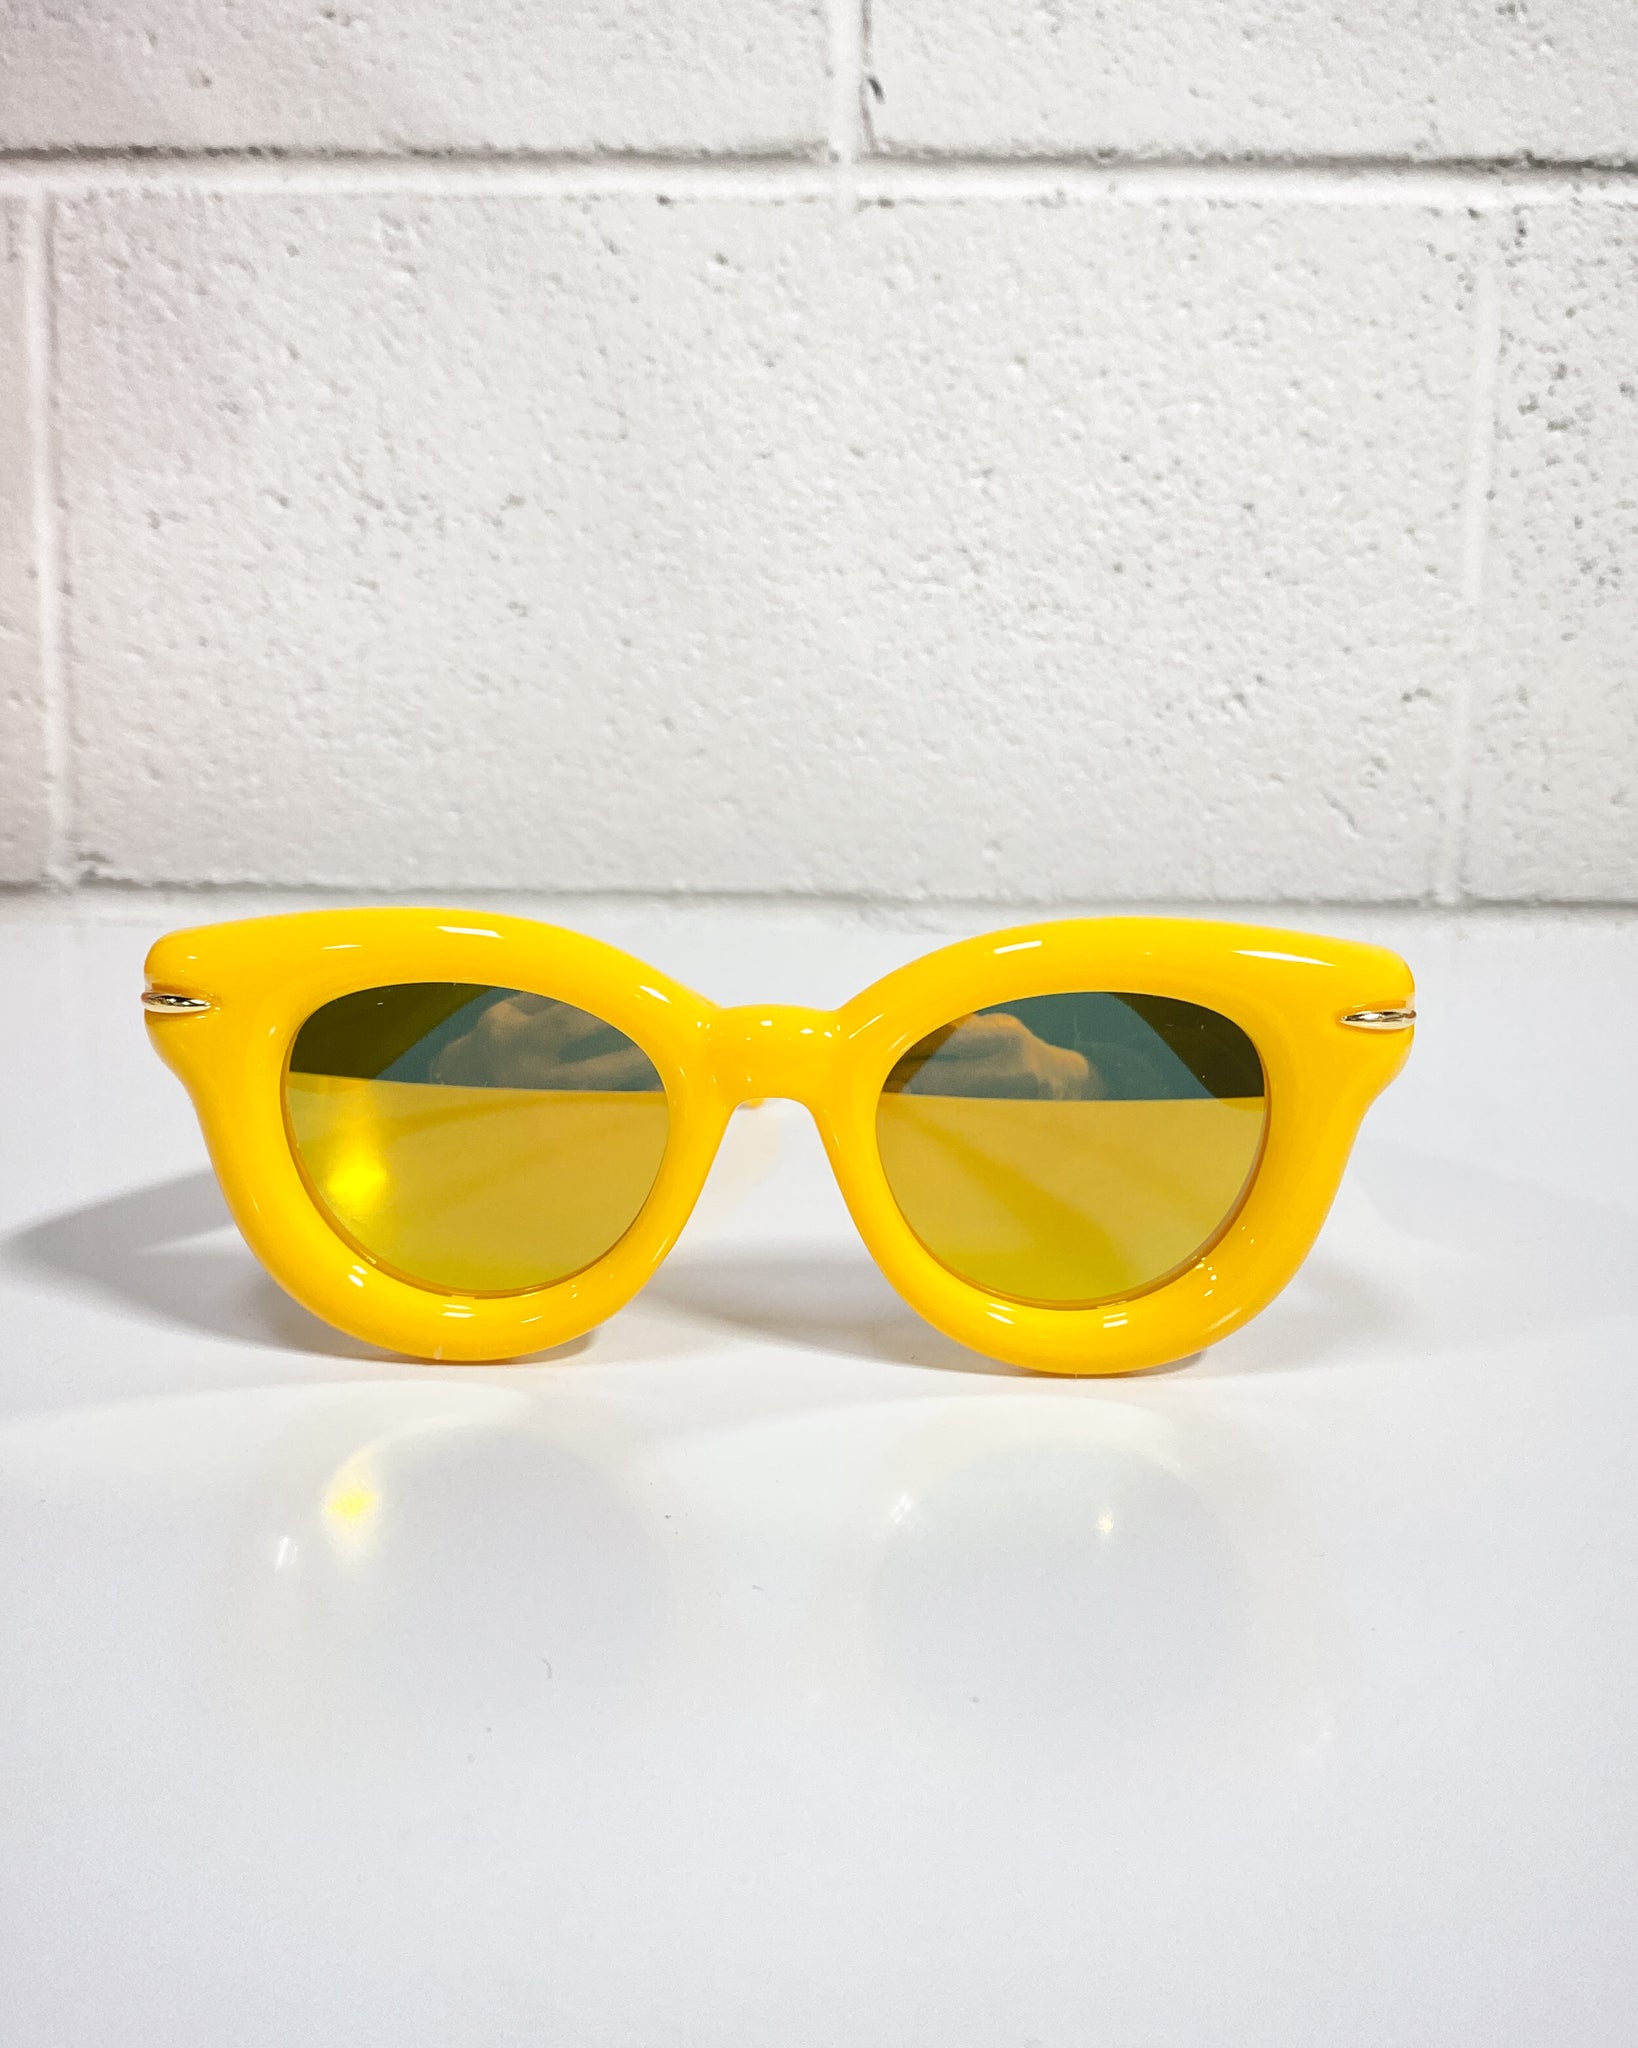 Sunglasses - reflective yellow